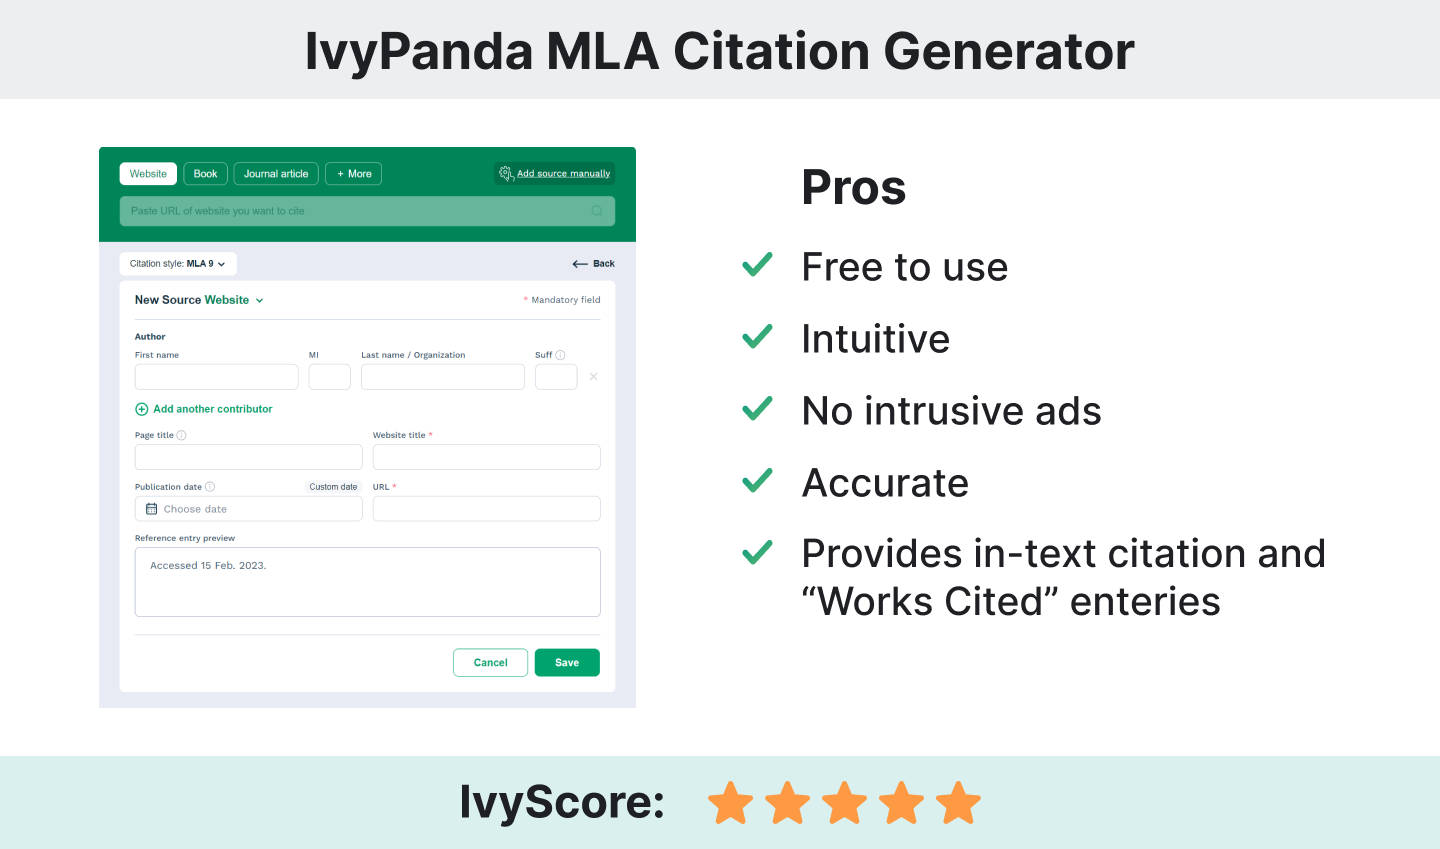 mla citation creator for websites